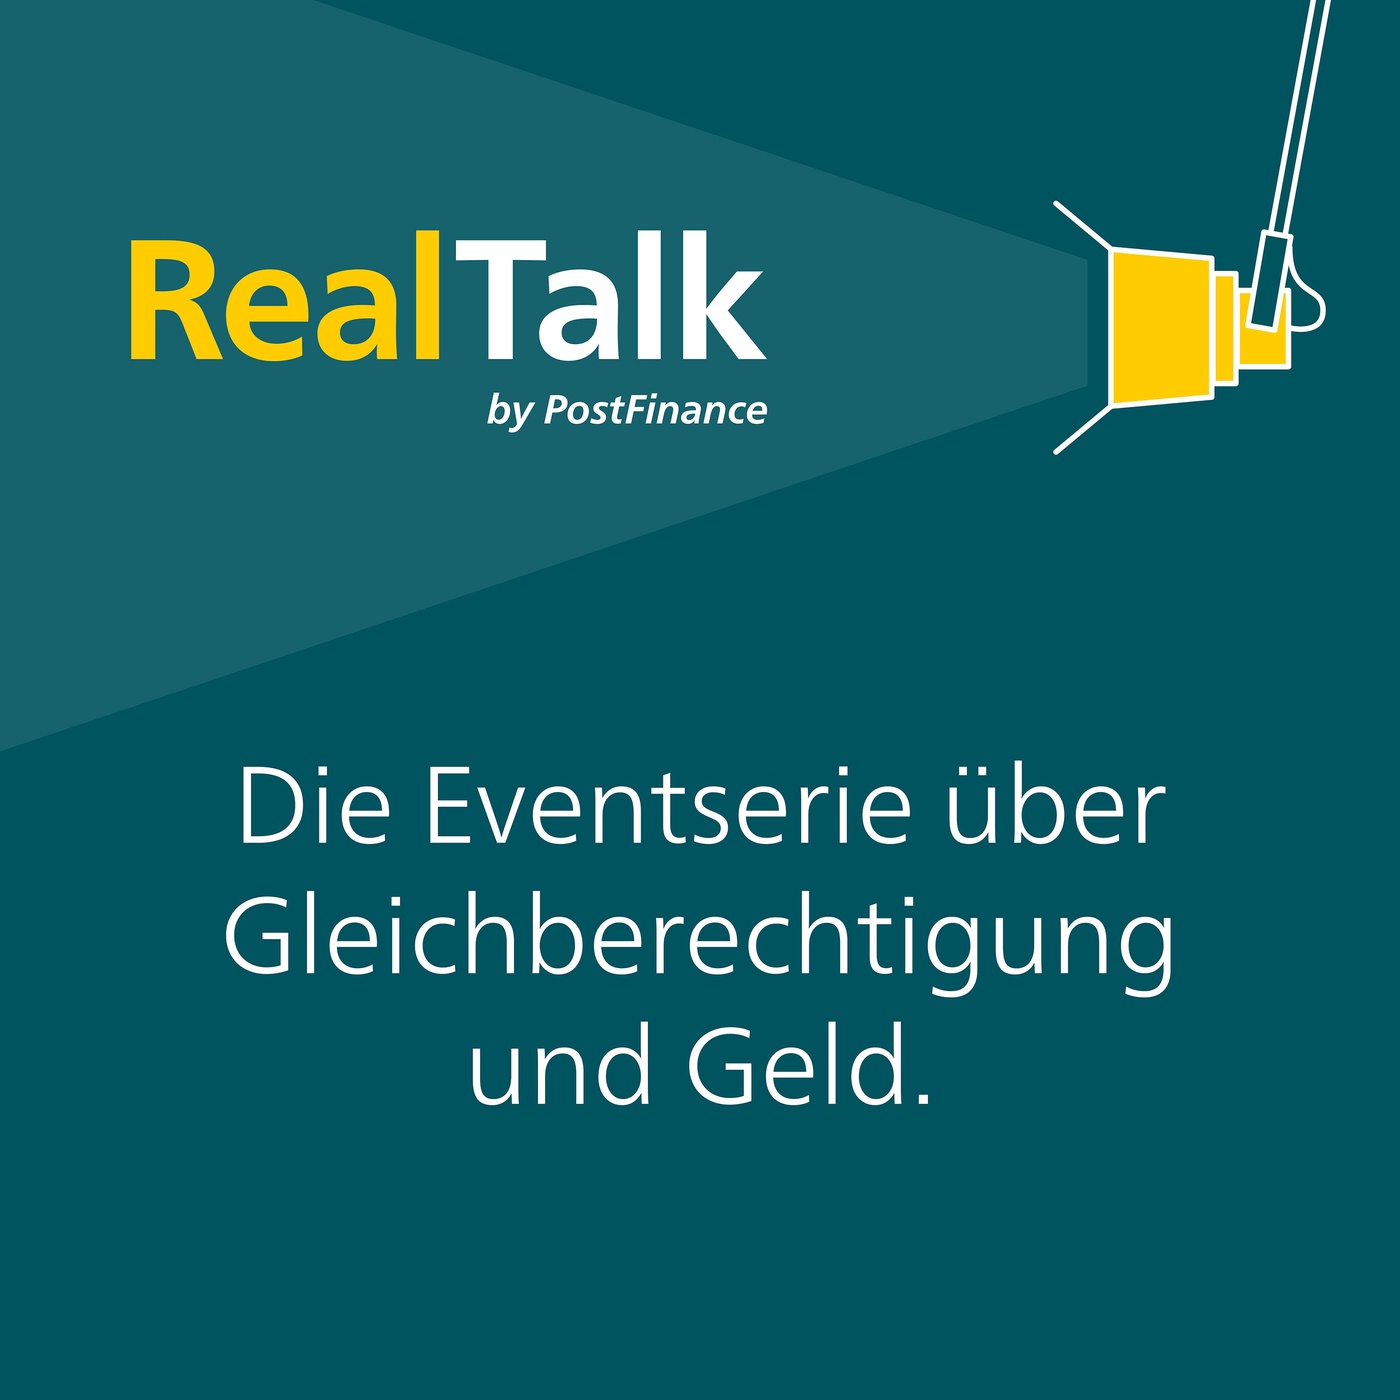 RealTalk by PostFinance